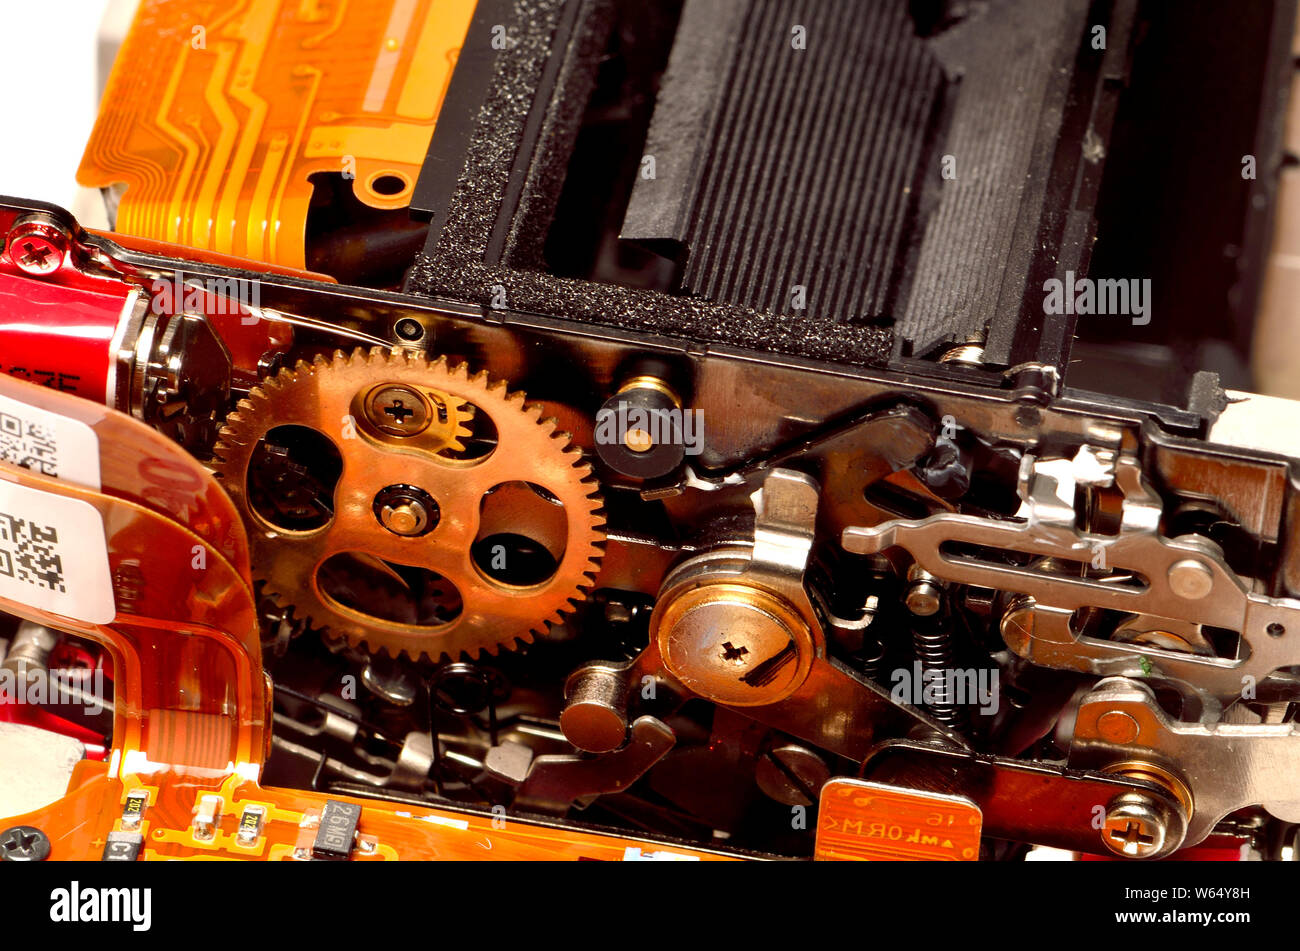 Workings of a digital camera (Nikon D200) Shutter mechanism Stock Photo